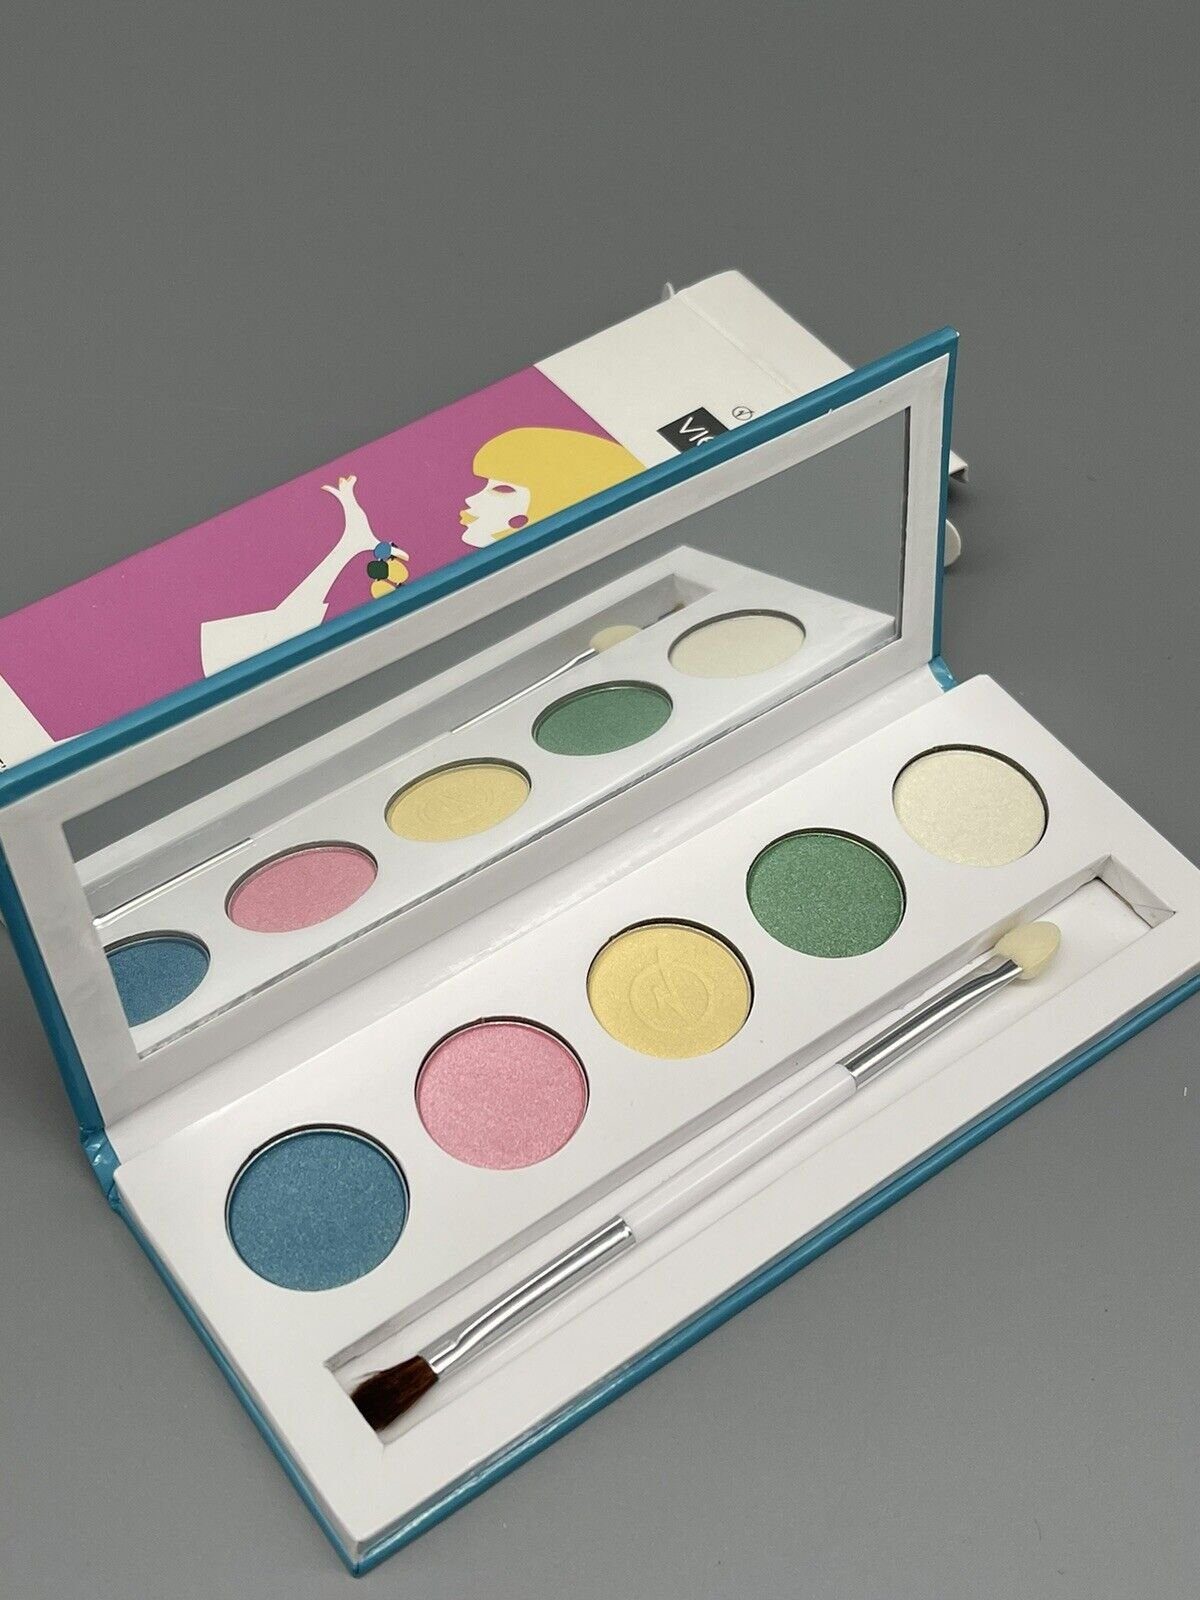 Schminke Farben 5 Make-Up Set Eyeshadow Lidschatten Lidschatten Glitzer A-VIEW